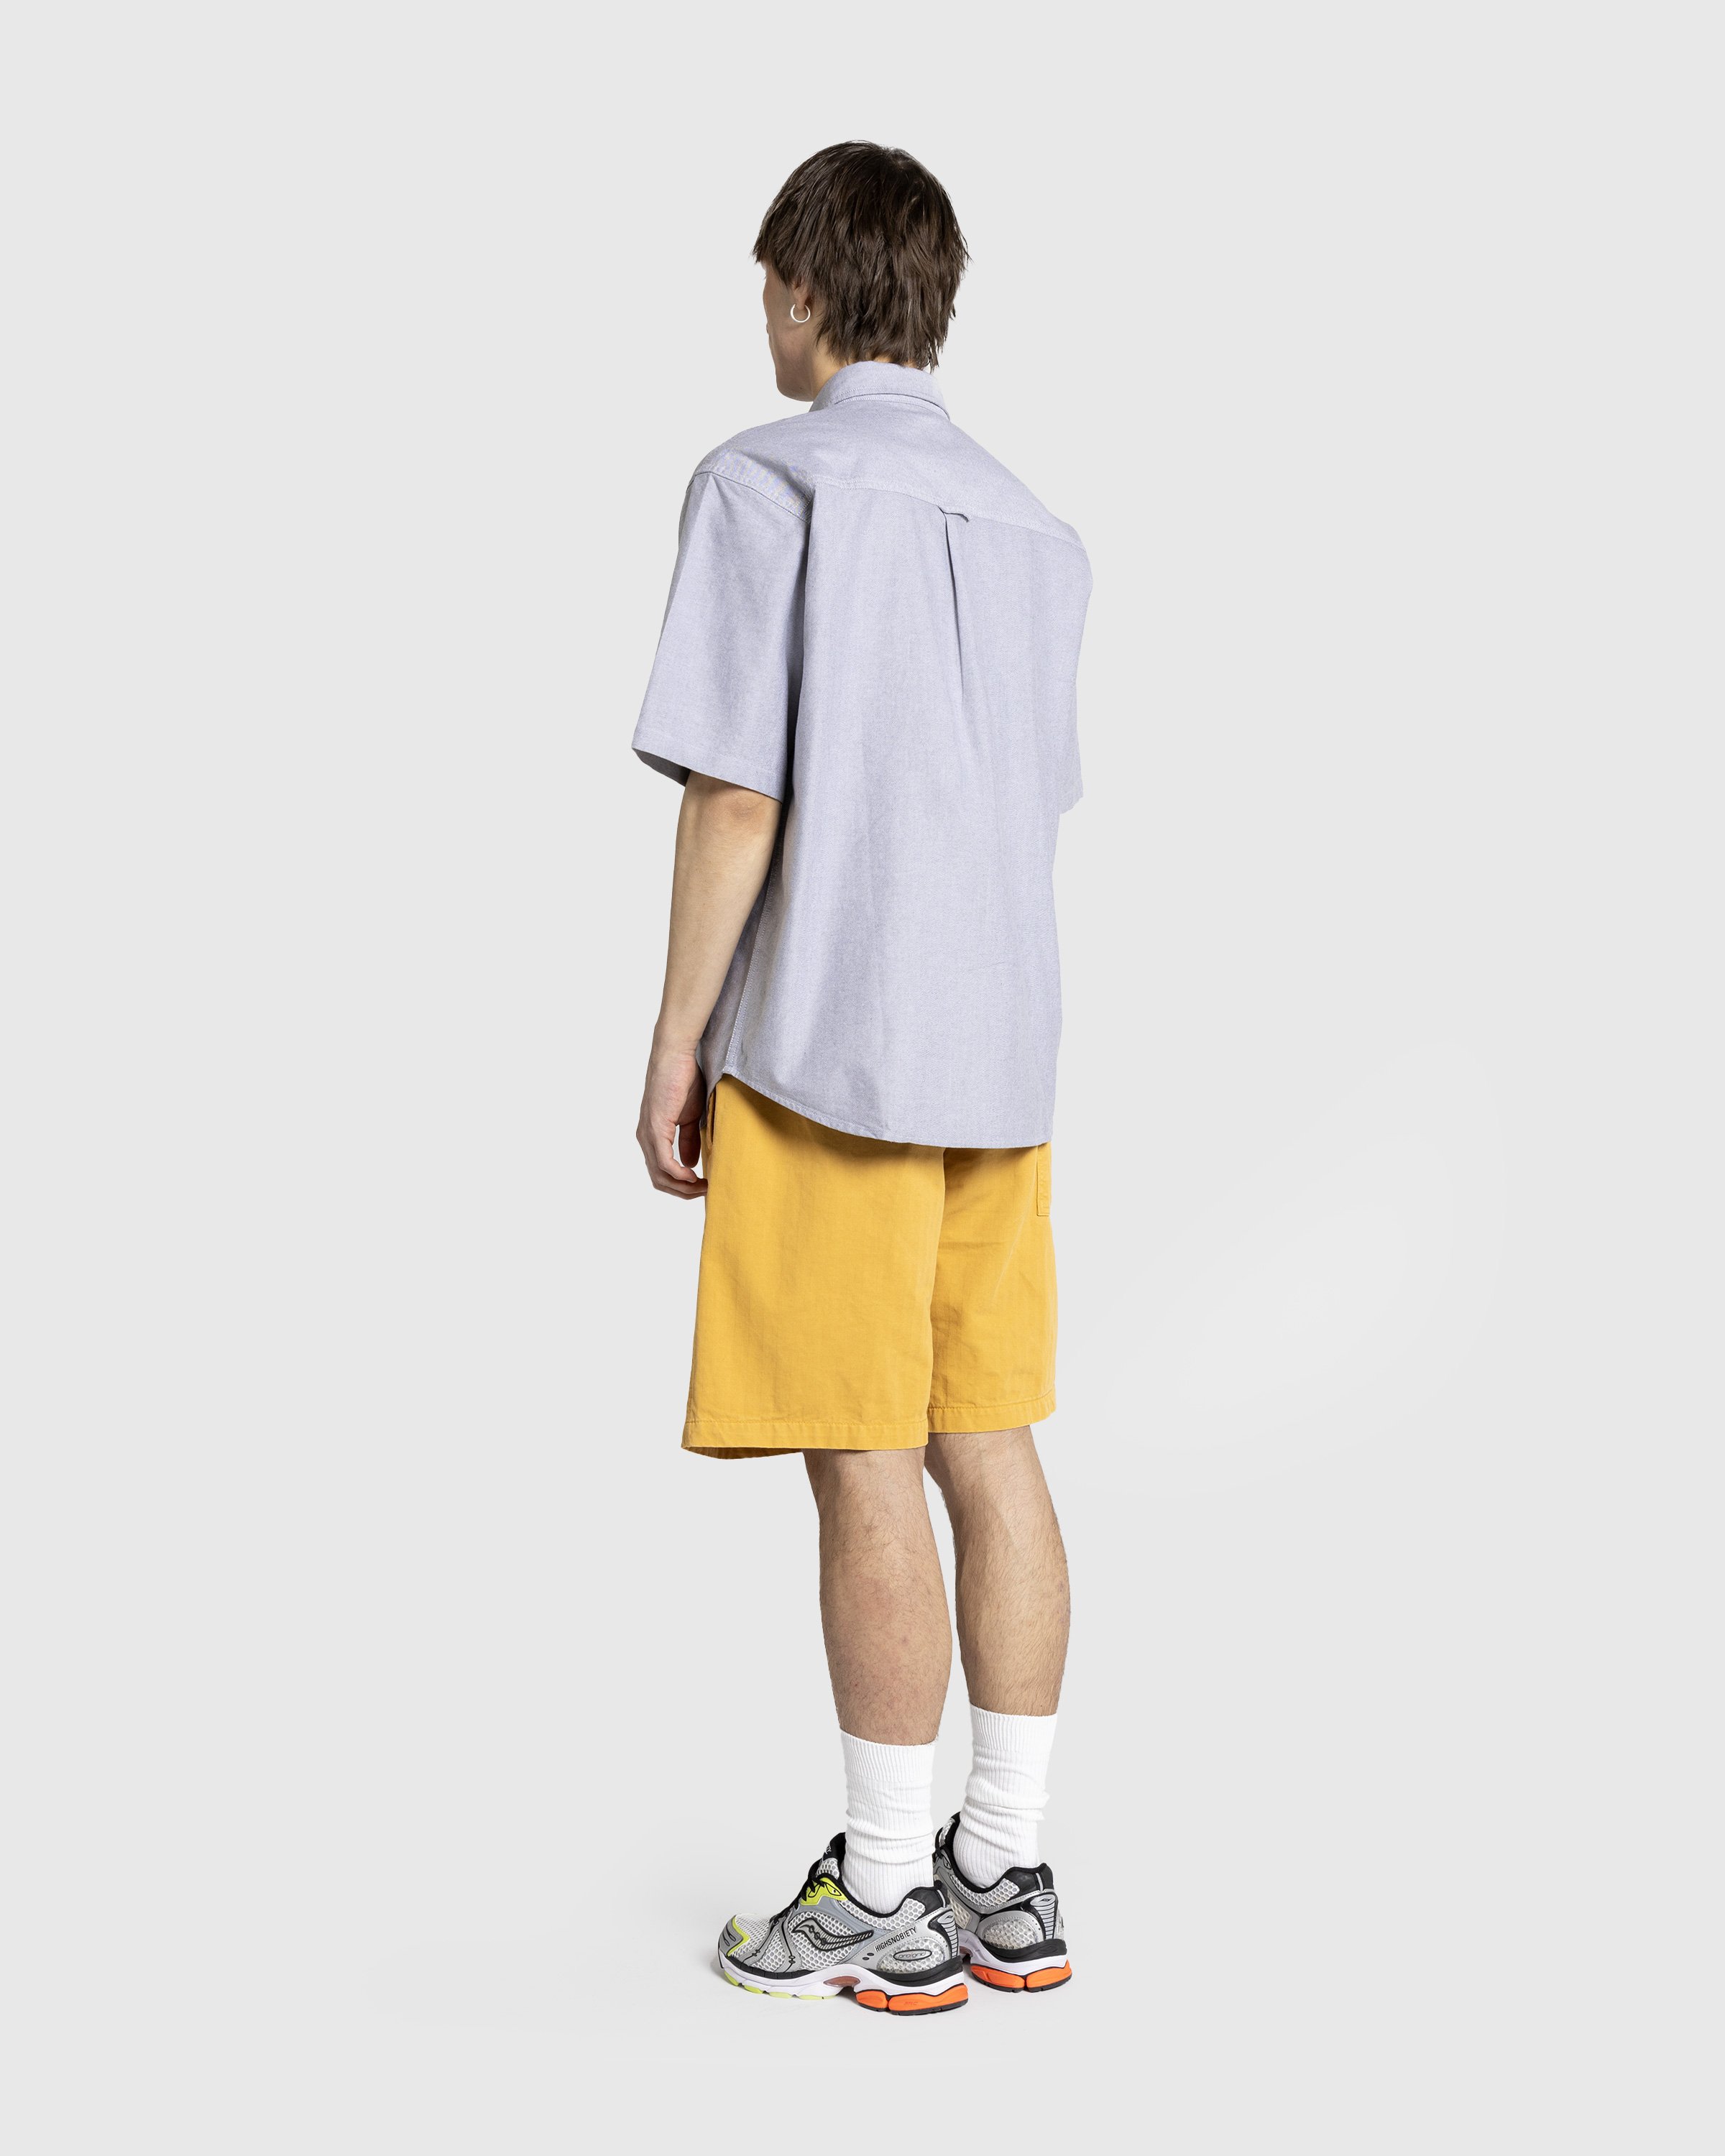 Carhartt WIP - S/S Braxton Shirt Charcoal / Wax - Clothing - Grey - Image 4